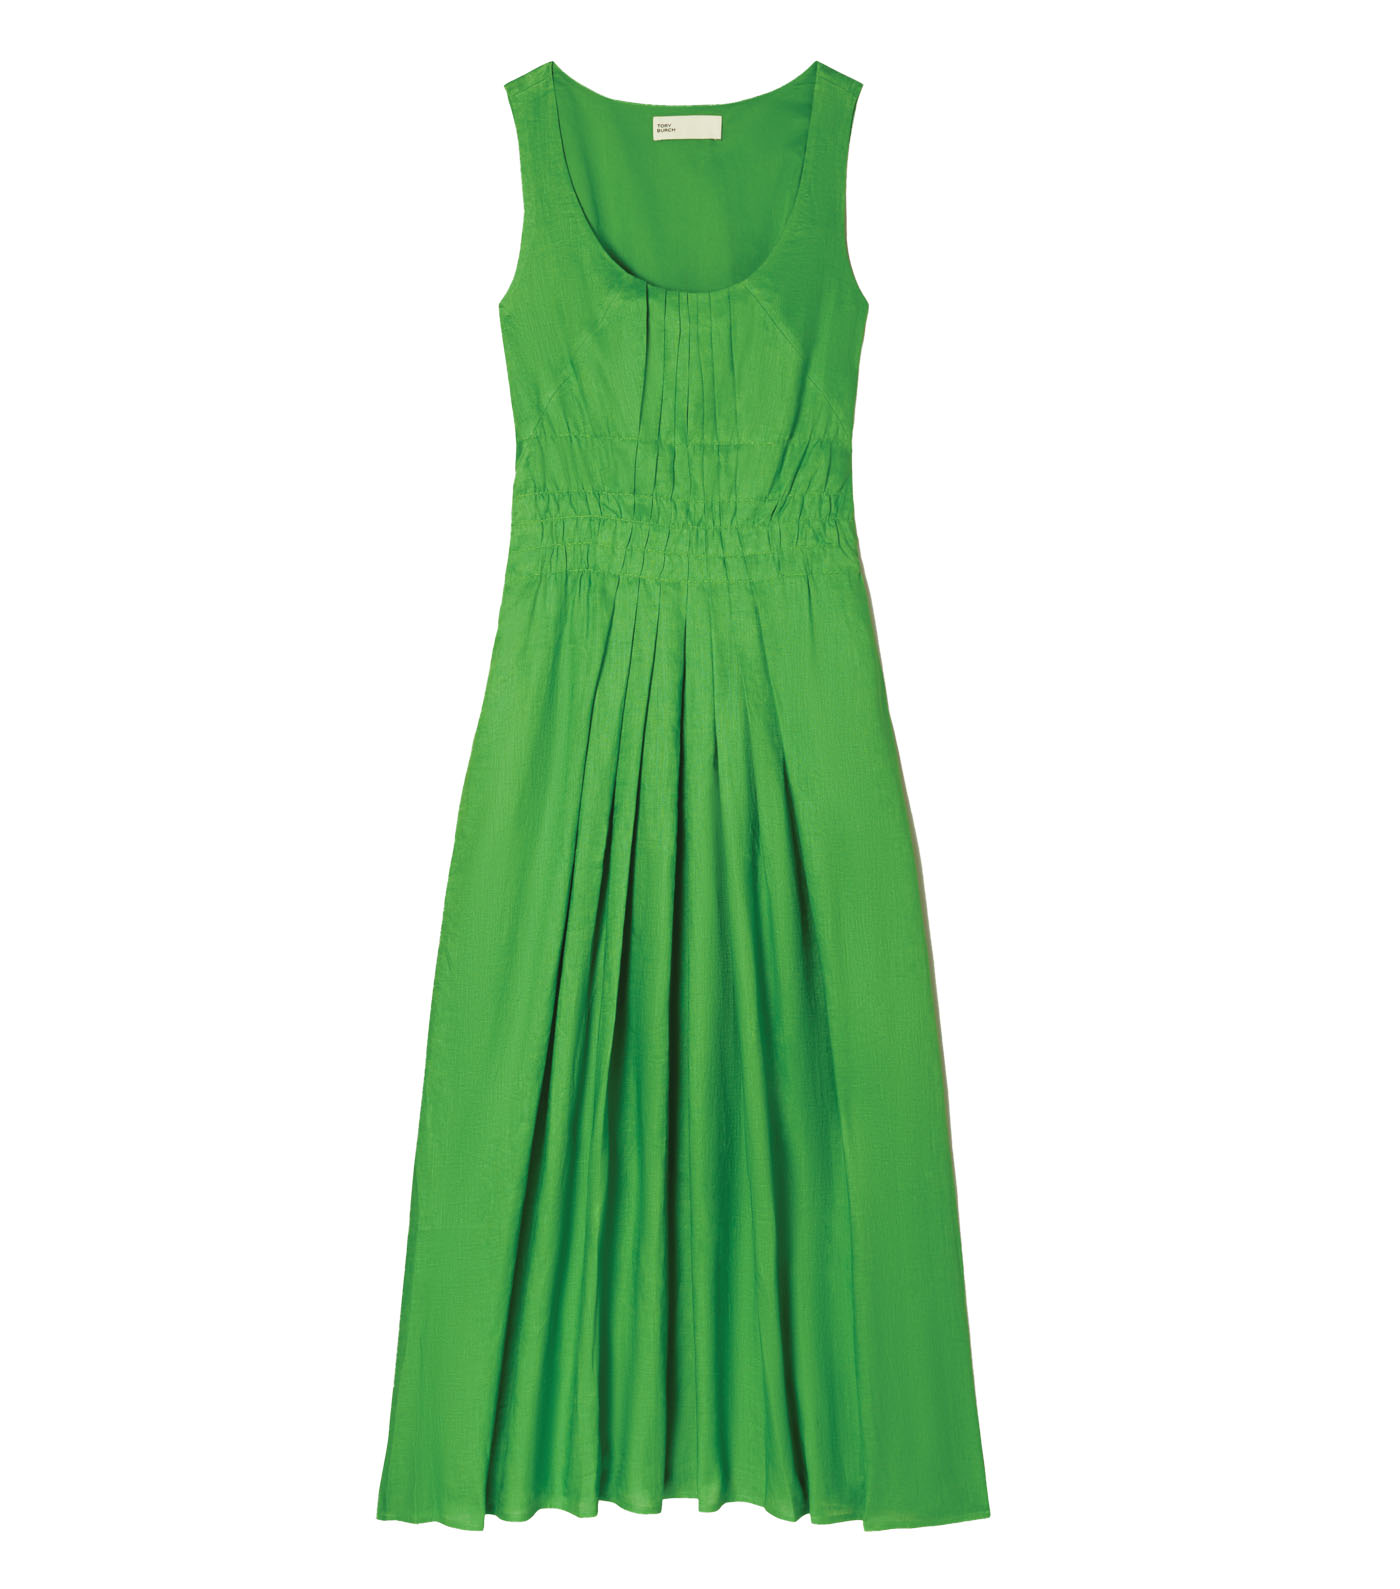 32 Tory Burch, Linen Pleat Dress In Bright Leaf, Toryburch.com